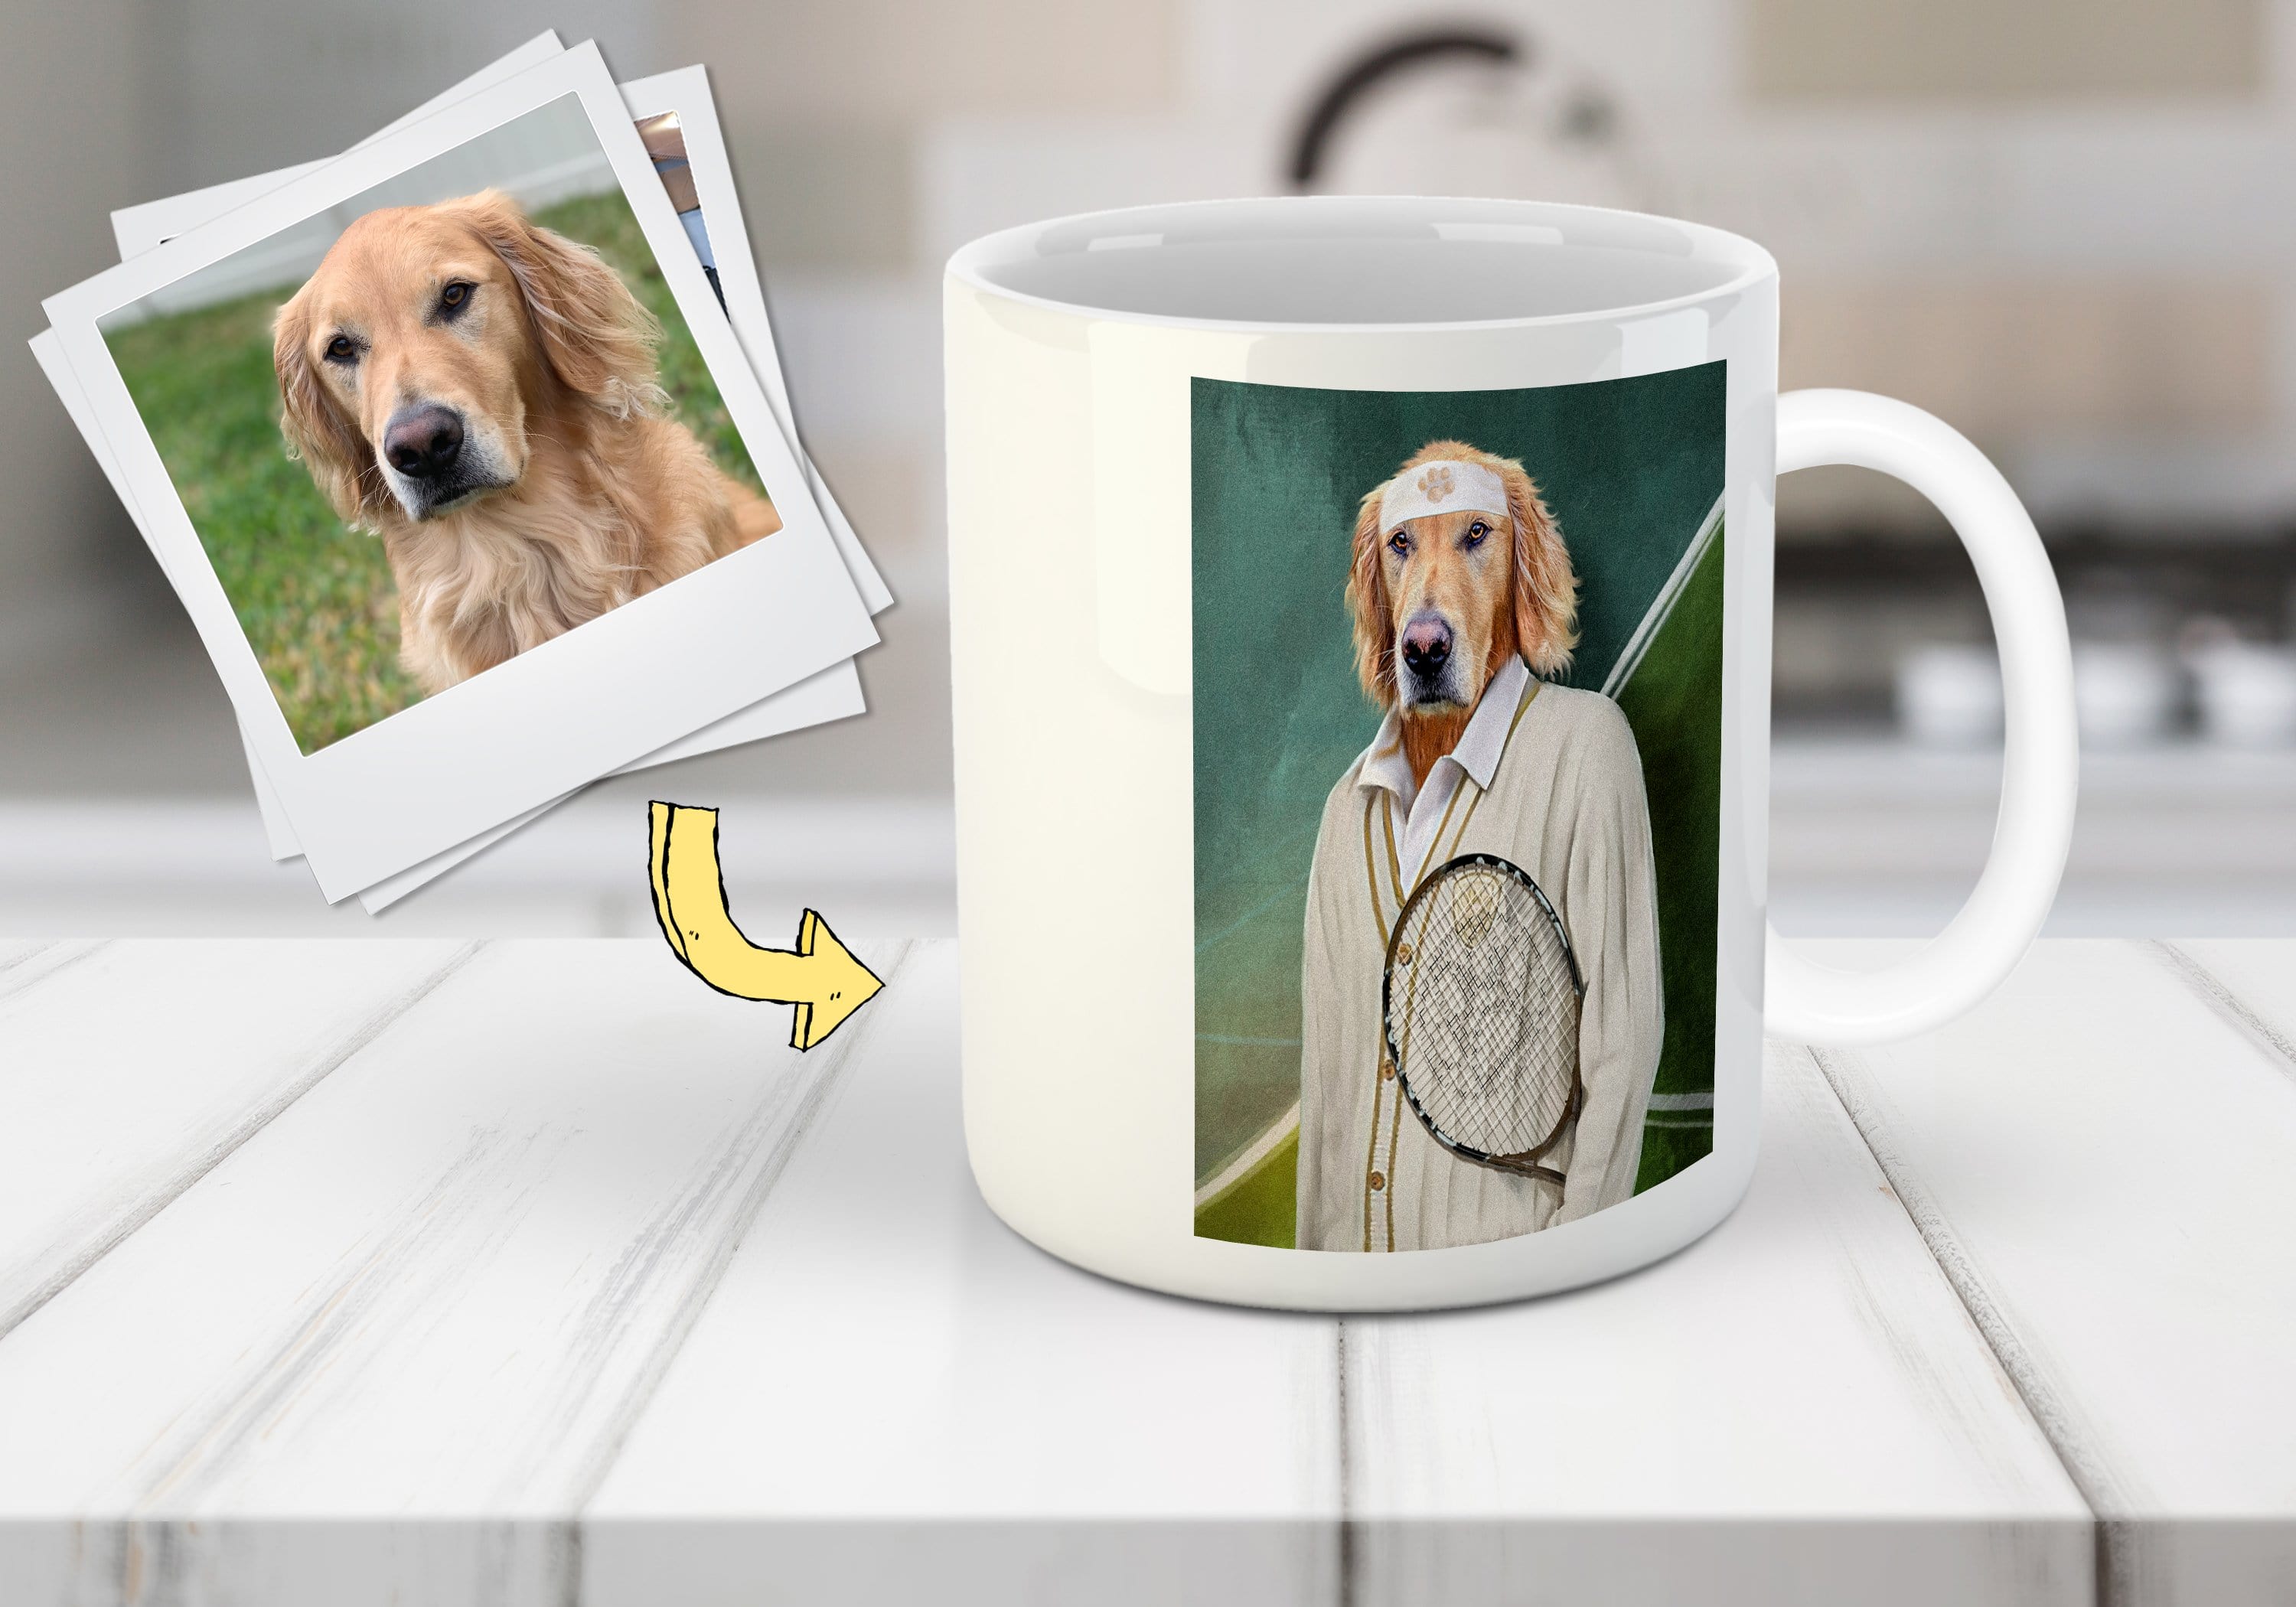 'Tennis Player' Custom Pet Mug